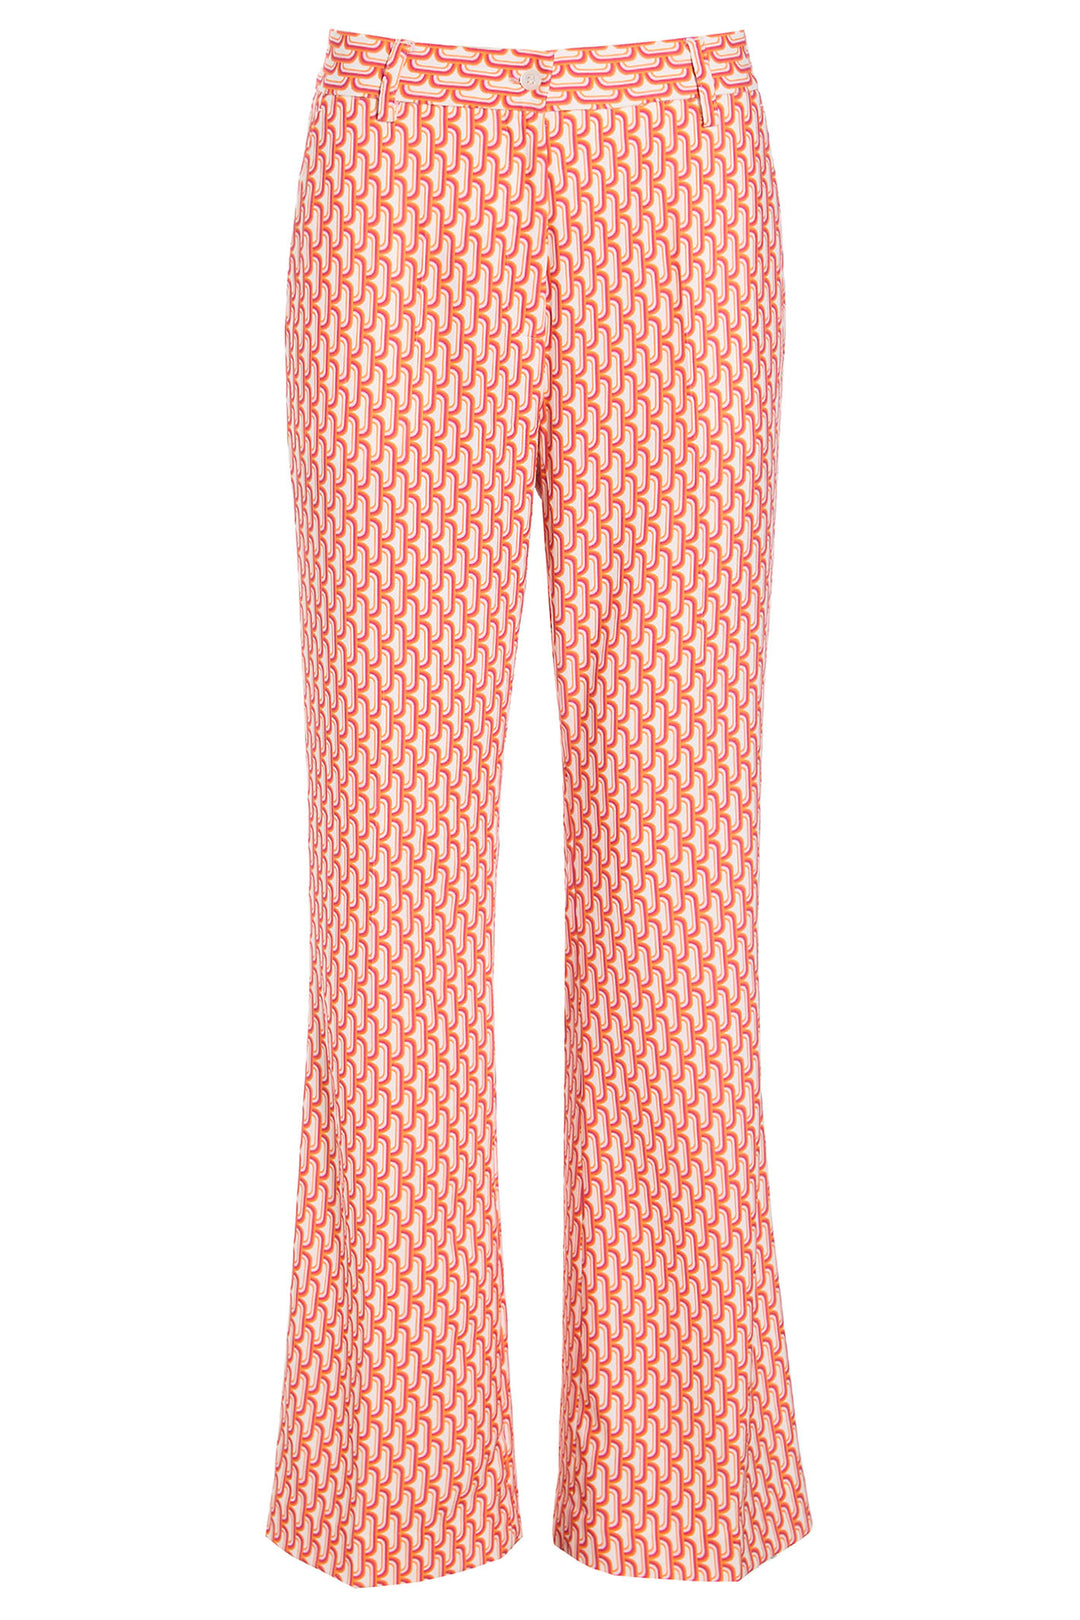 Dea Kudibal Rihannadea 0390424 5783 Pink Yukon Leche Flared Trousers - Olivia Grace Fashion